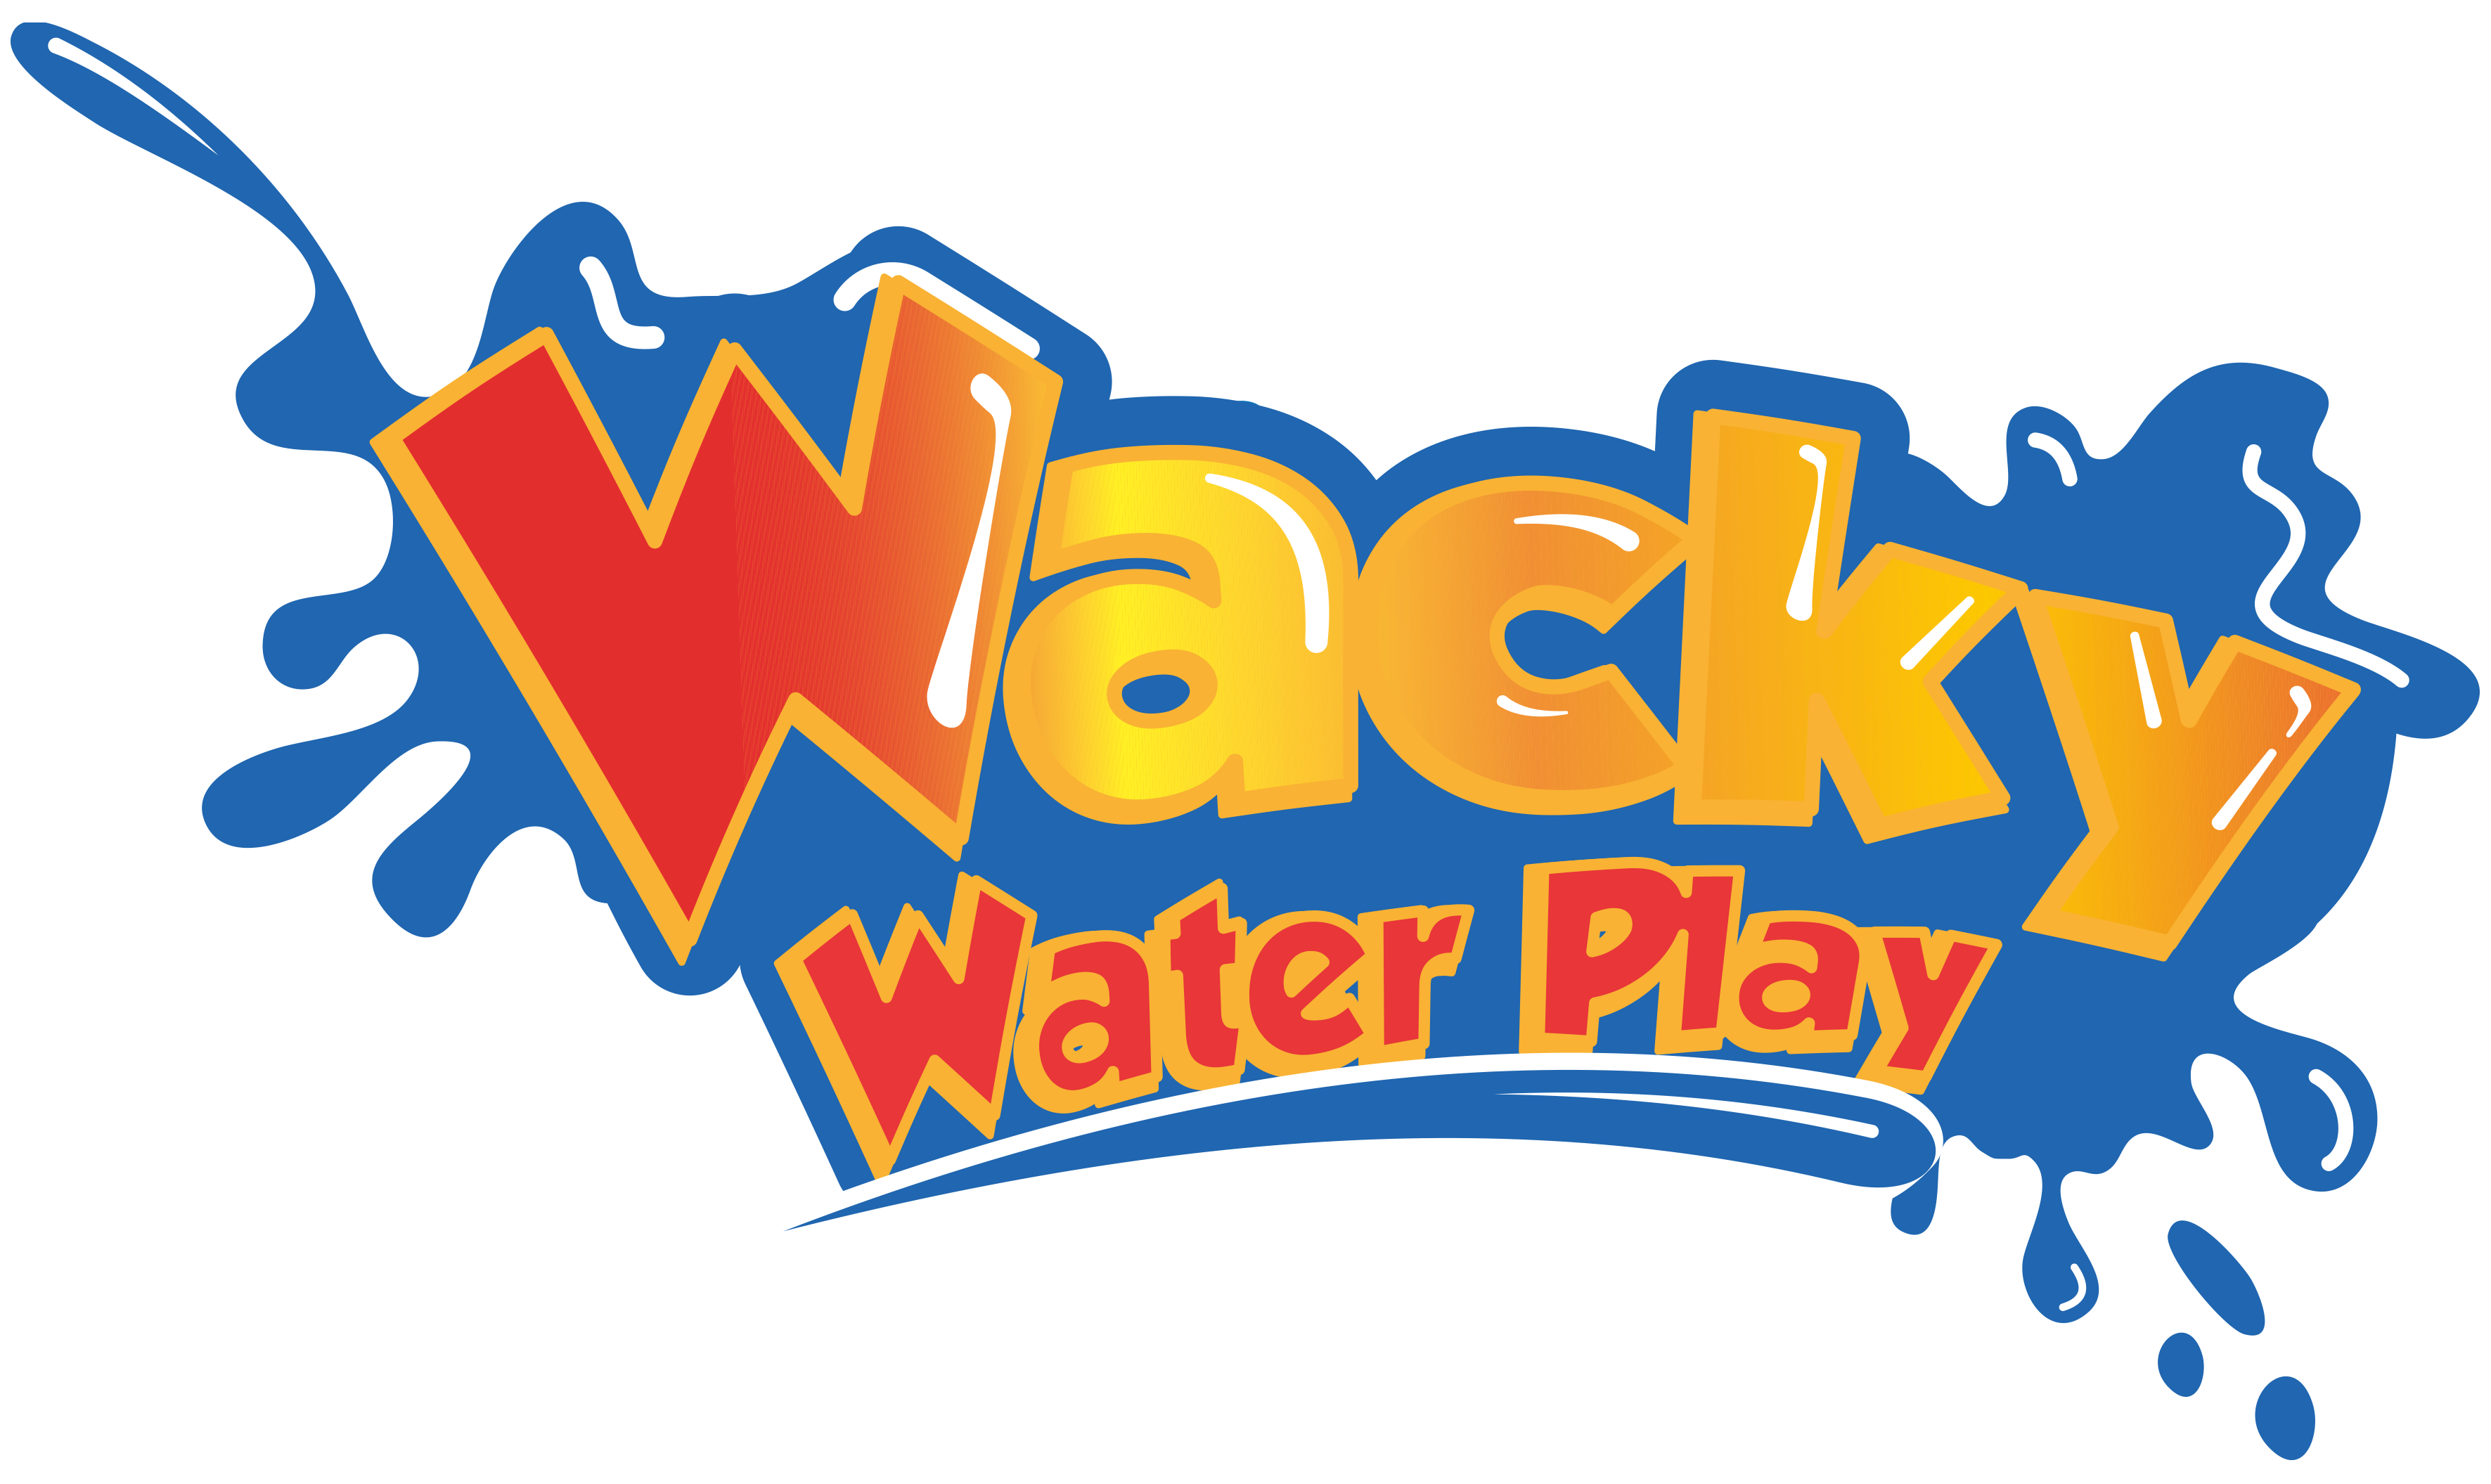 Wacky Water Play